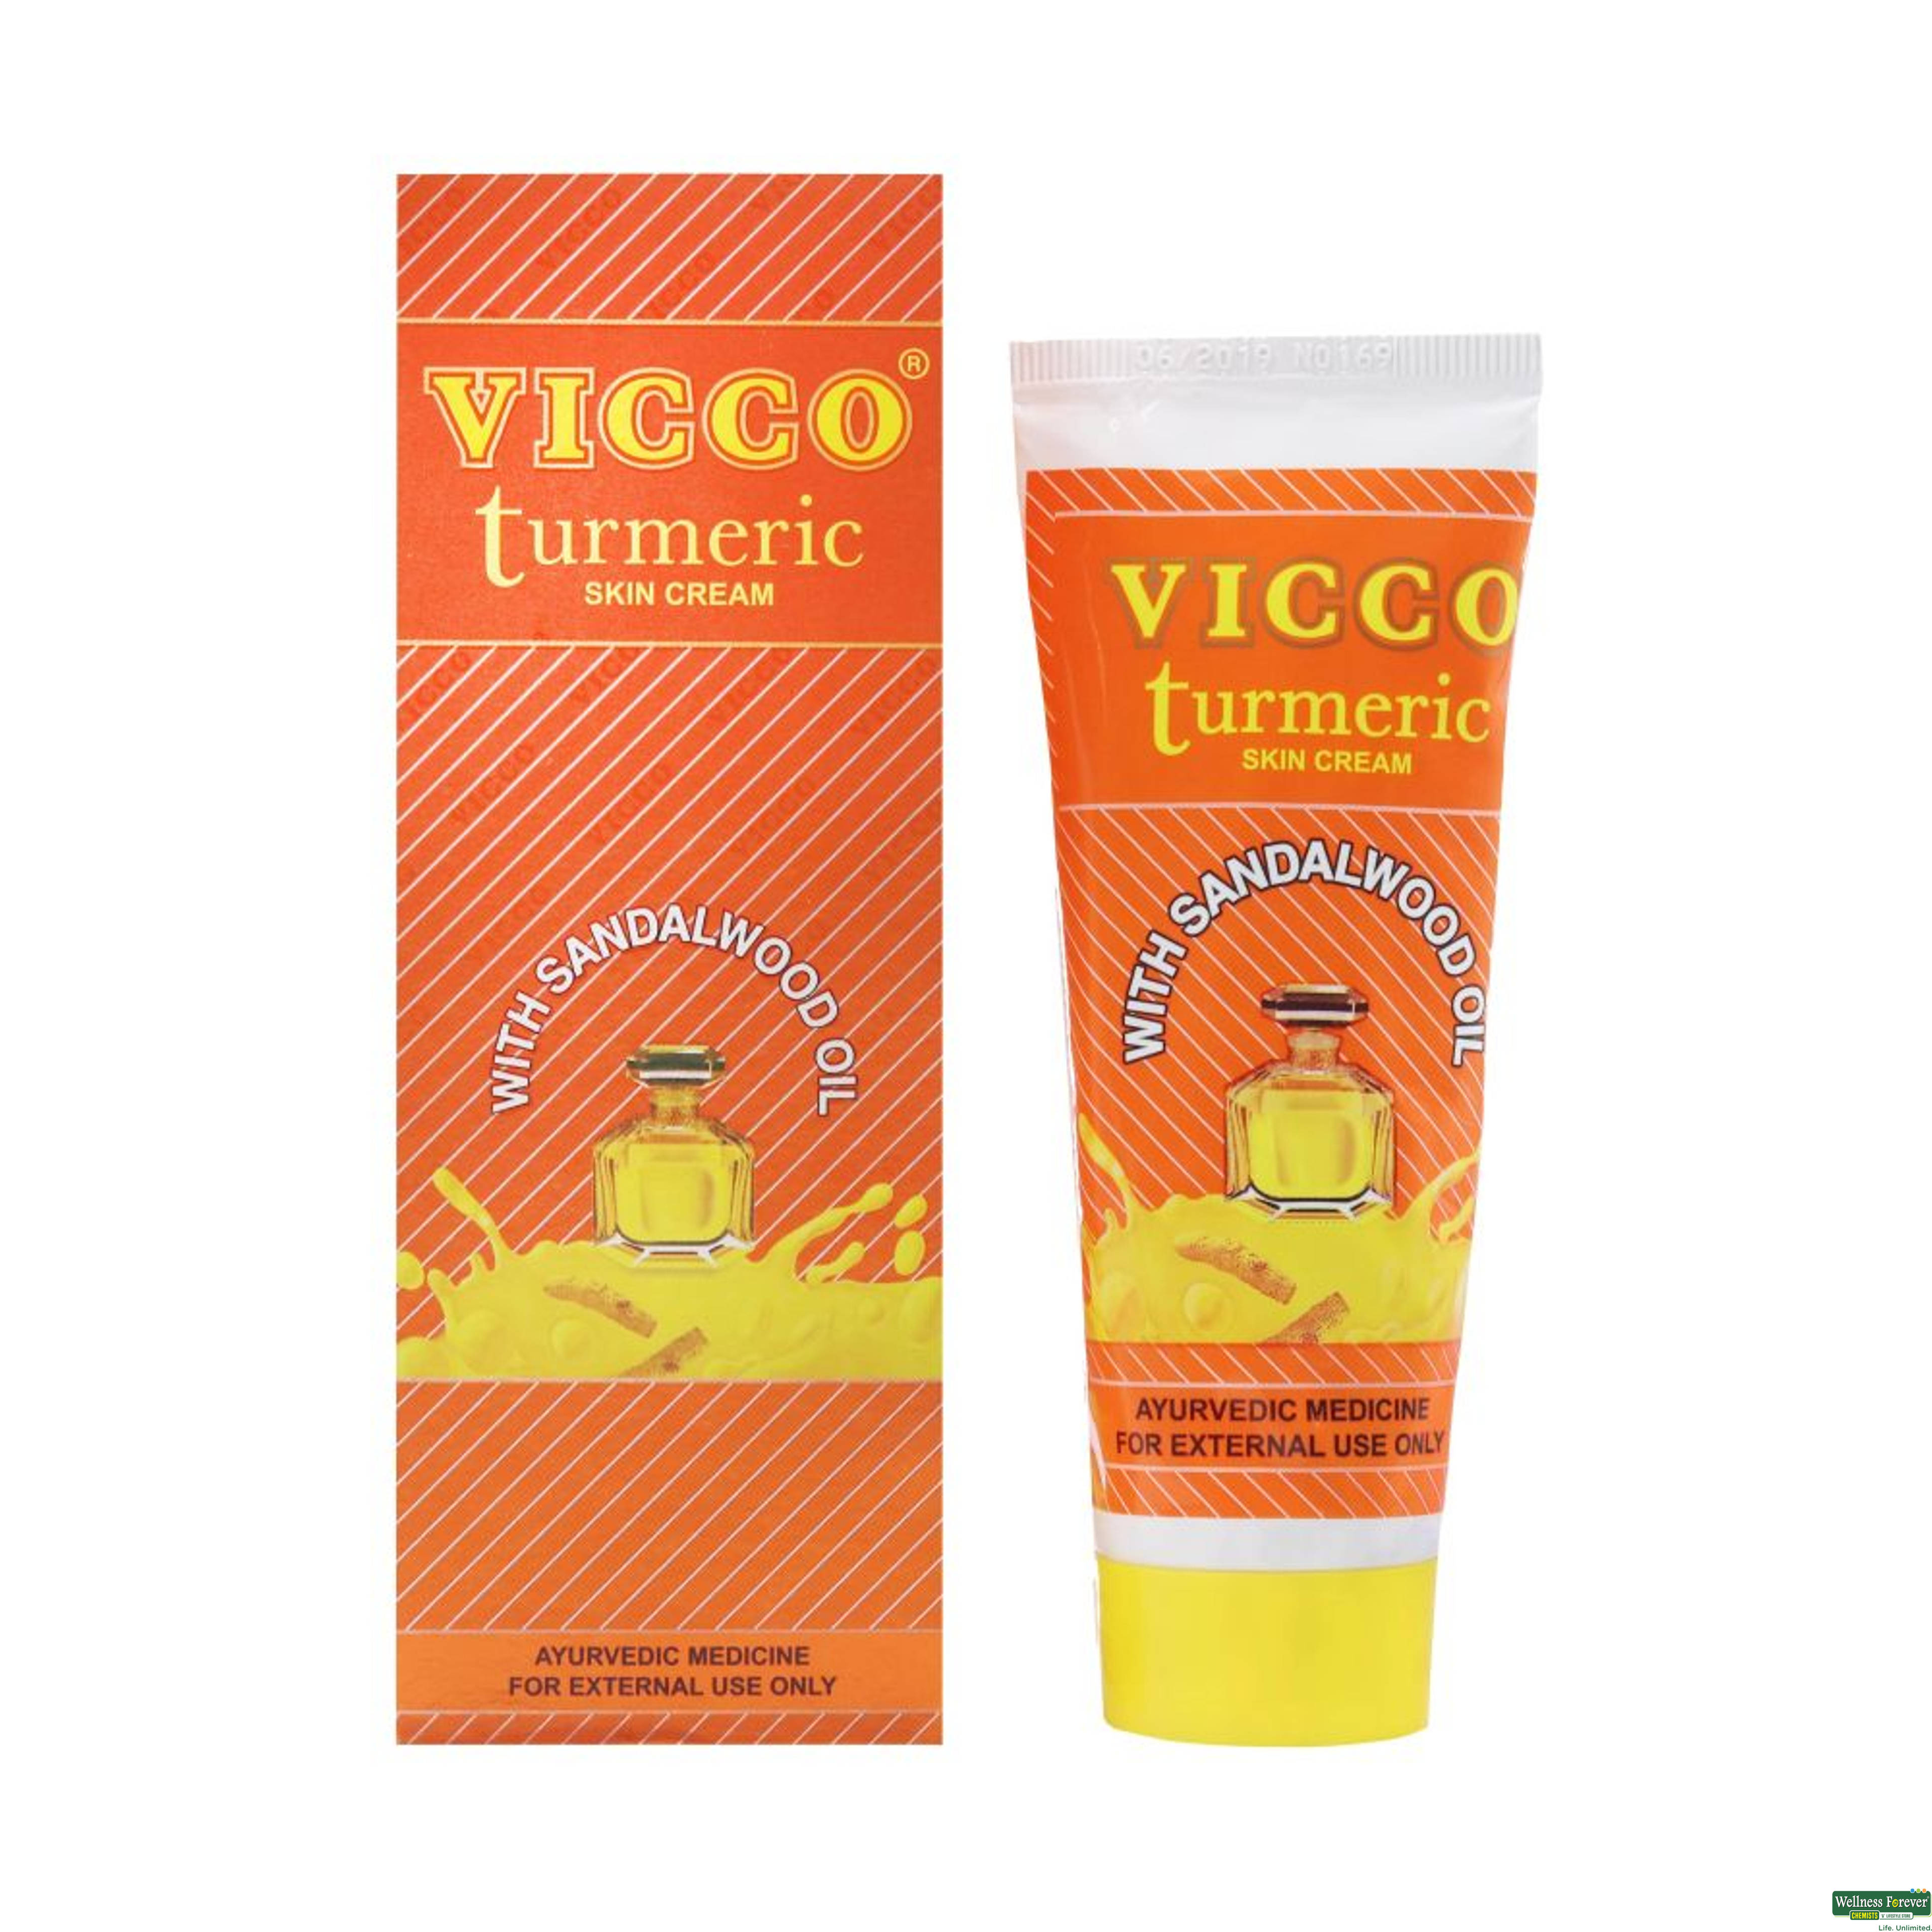 Vicco Turmeric And Sandalwood Skin Cream, 70 g-image